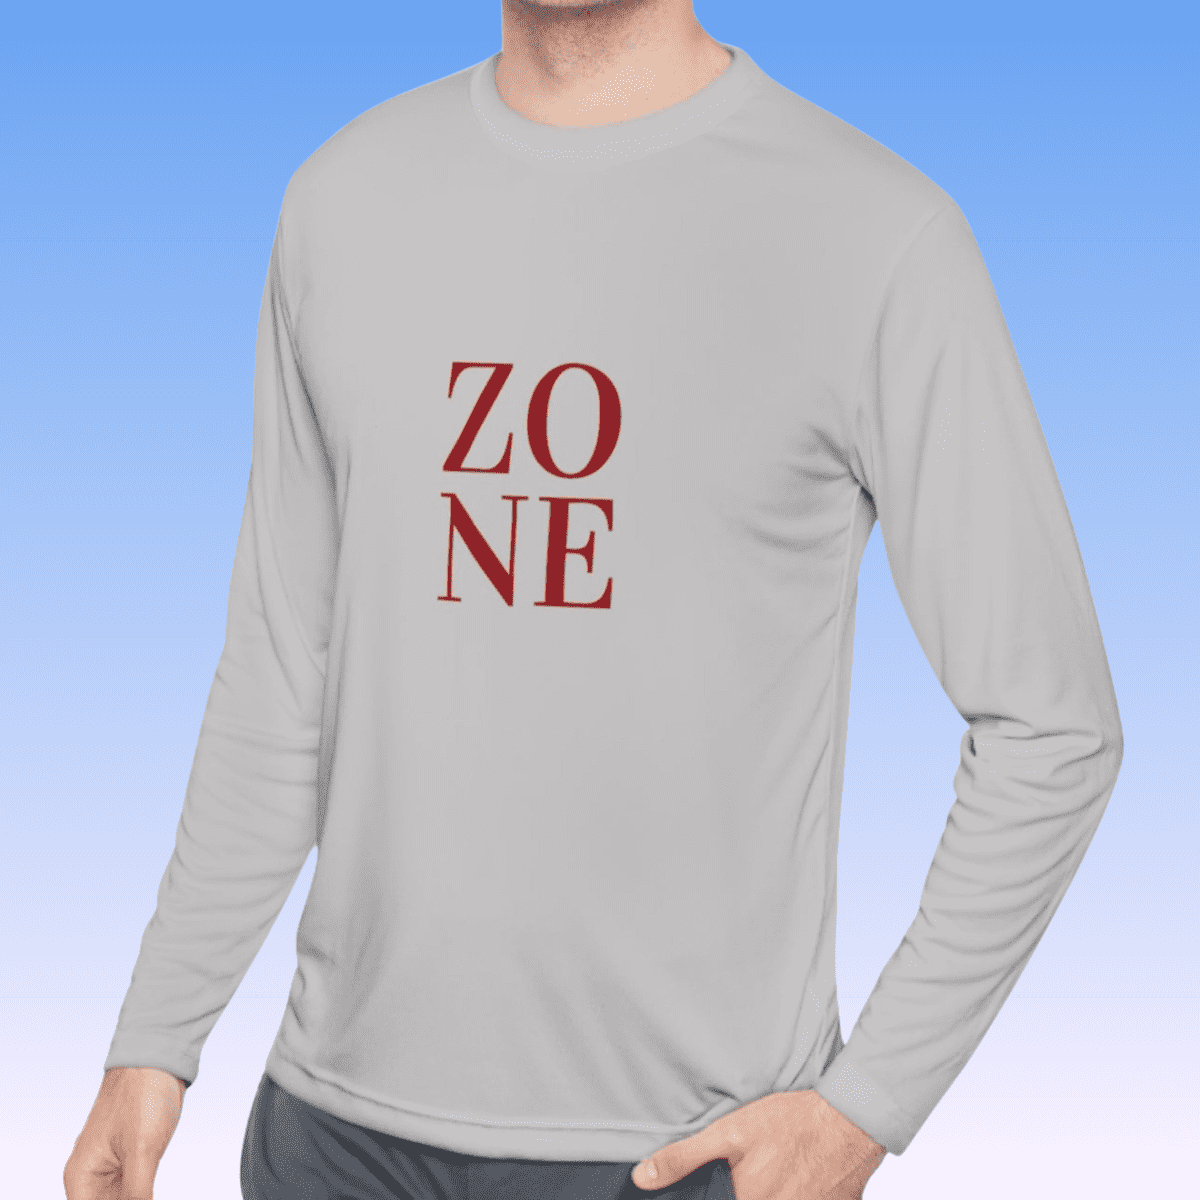 Silver Men's Zone Red Long Sleeve Moisture-Wicking Tee